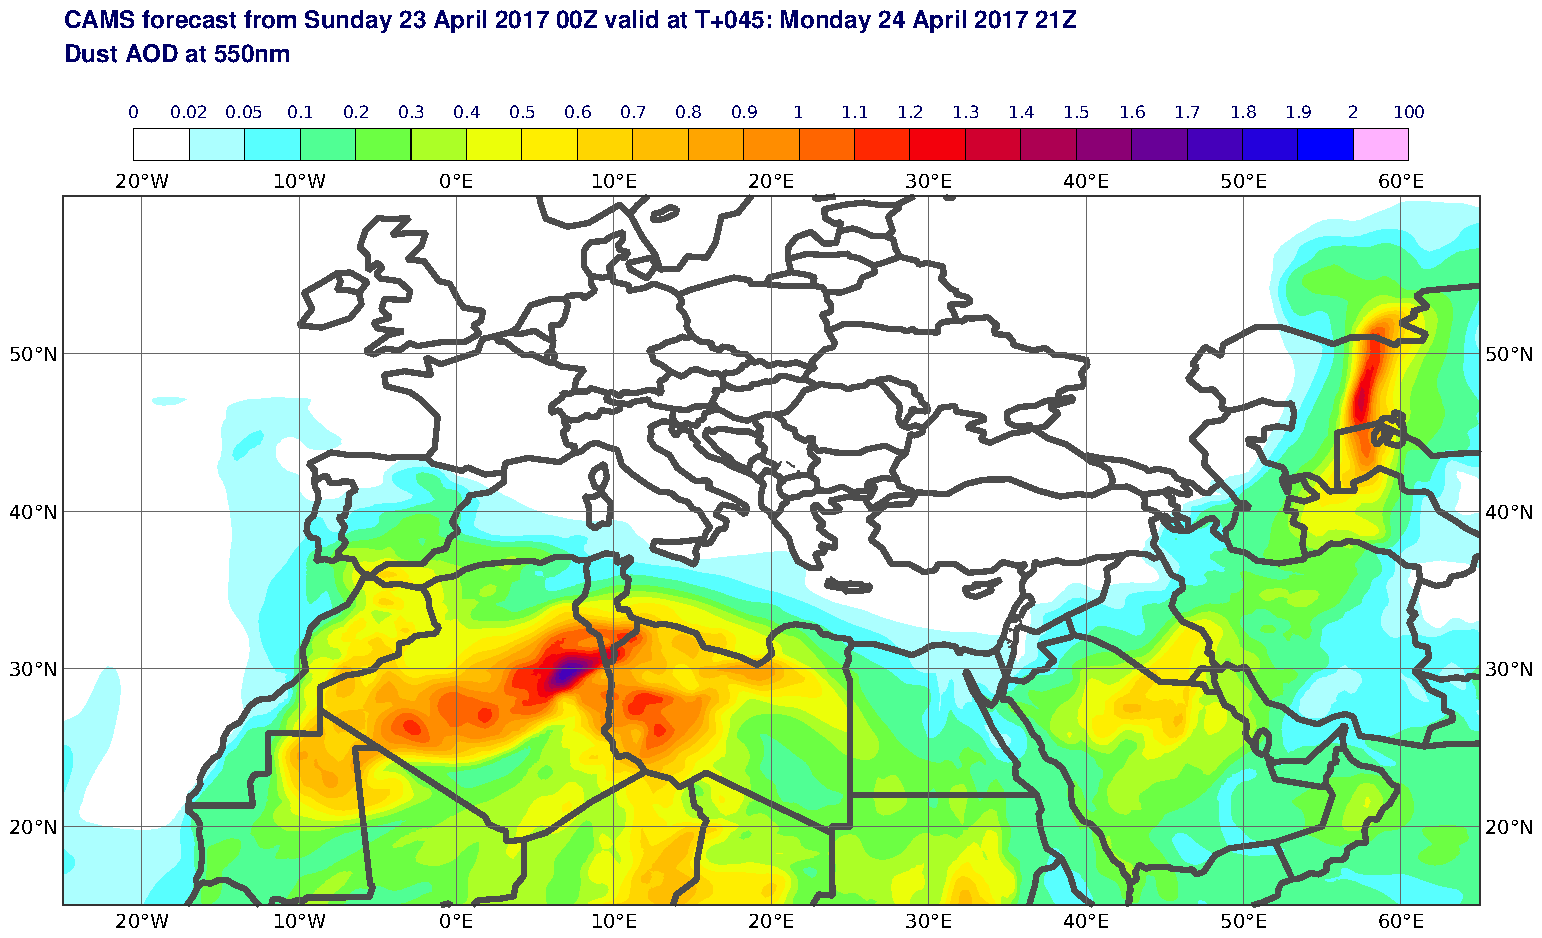 Dust AOD at 550nm valid at T45 - 2017-04-24 21:00